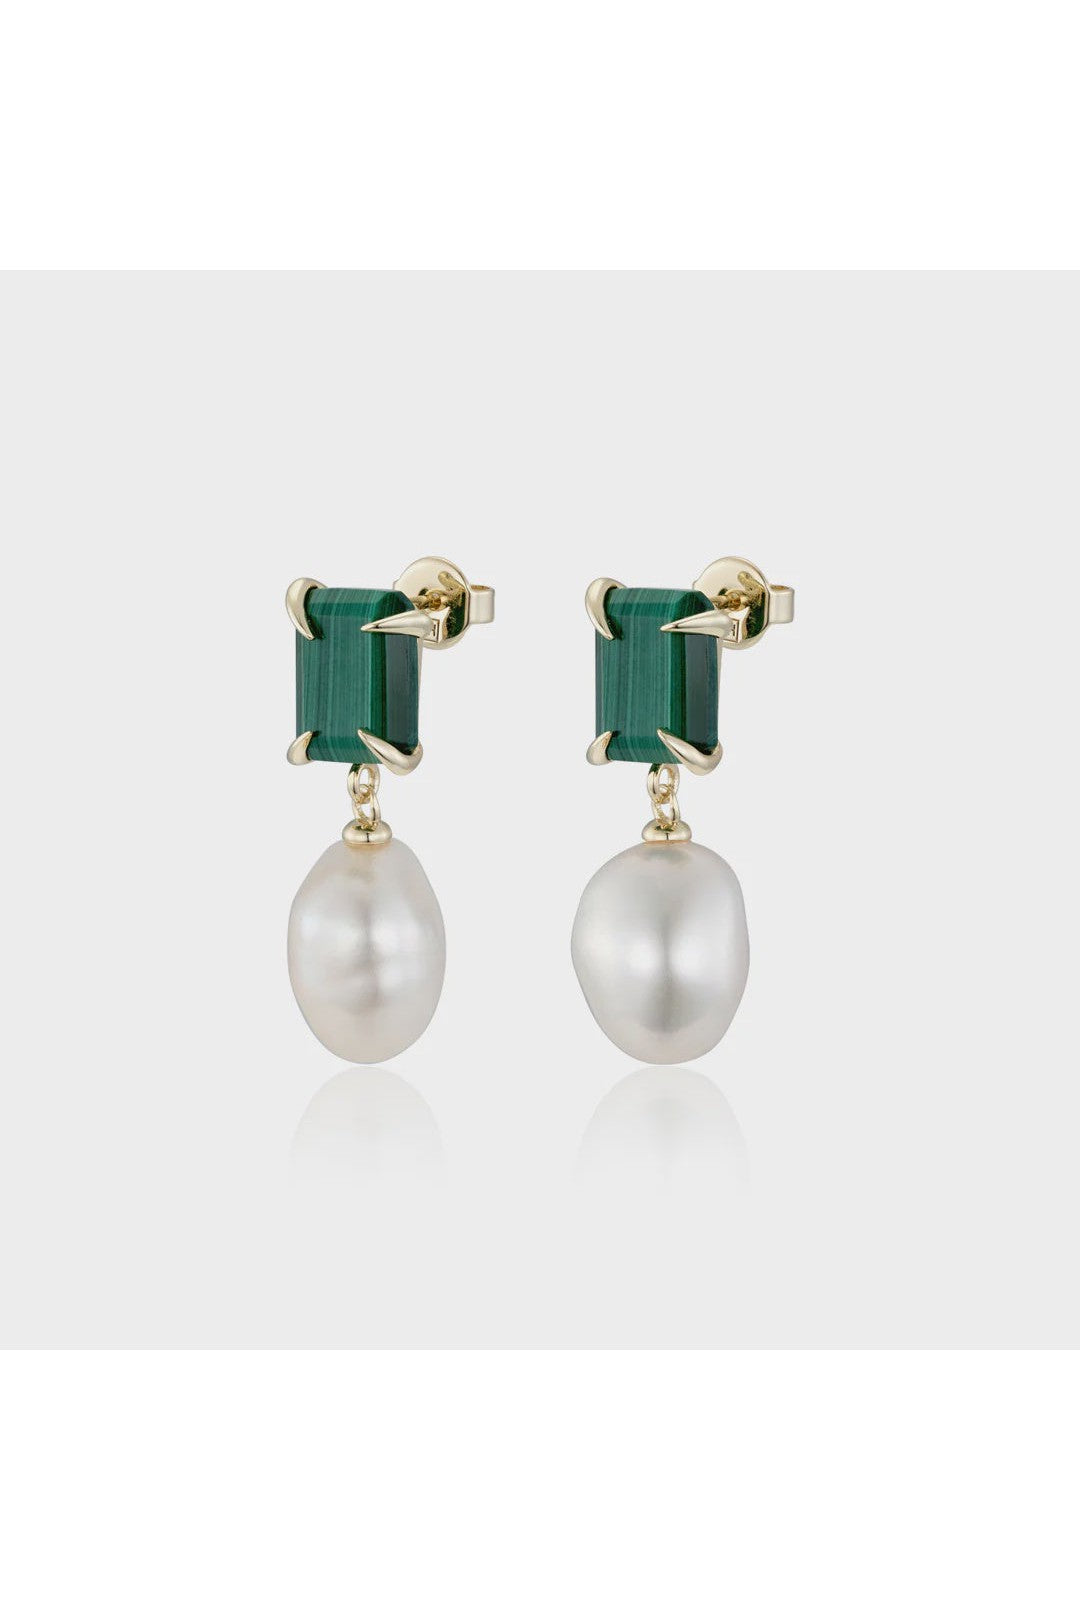 Gemstone pearl studs, malachite